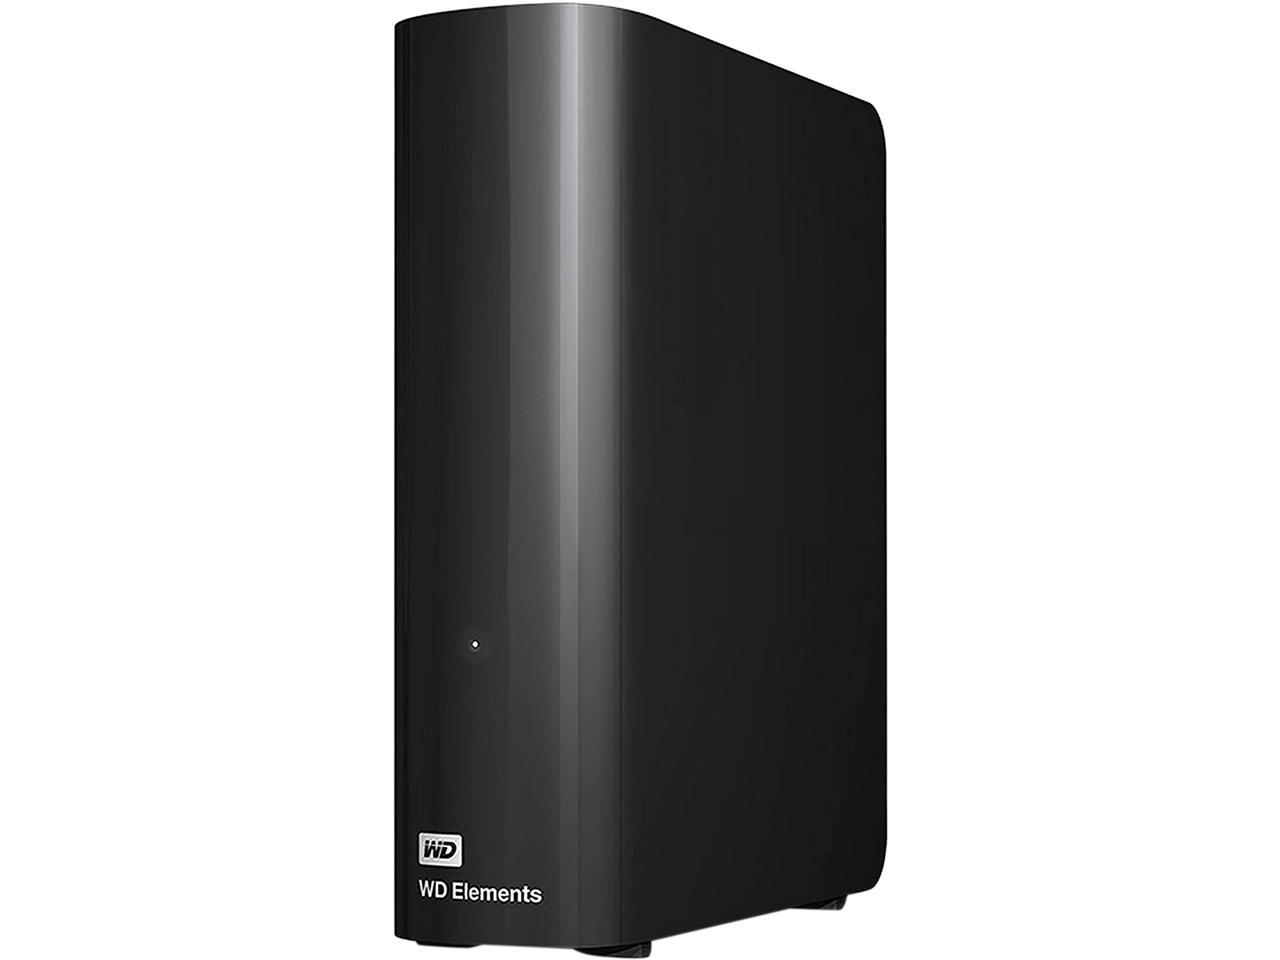 16TB WD Elements Desktop Hard Drive @Newegg $260